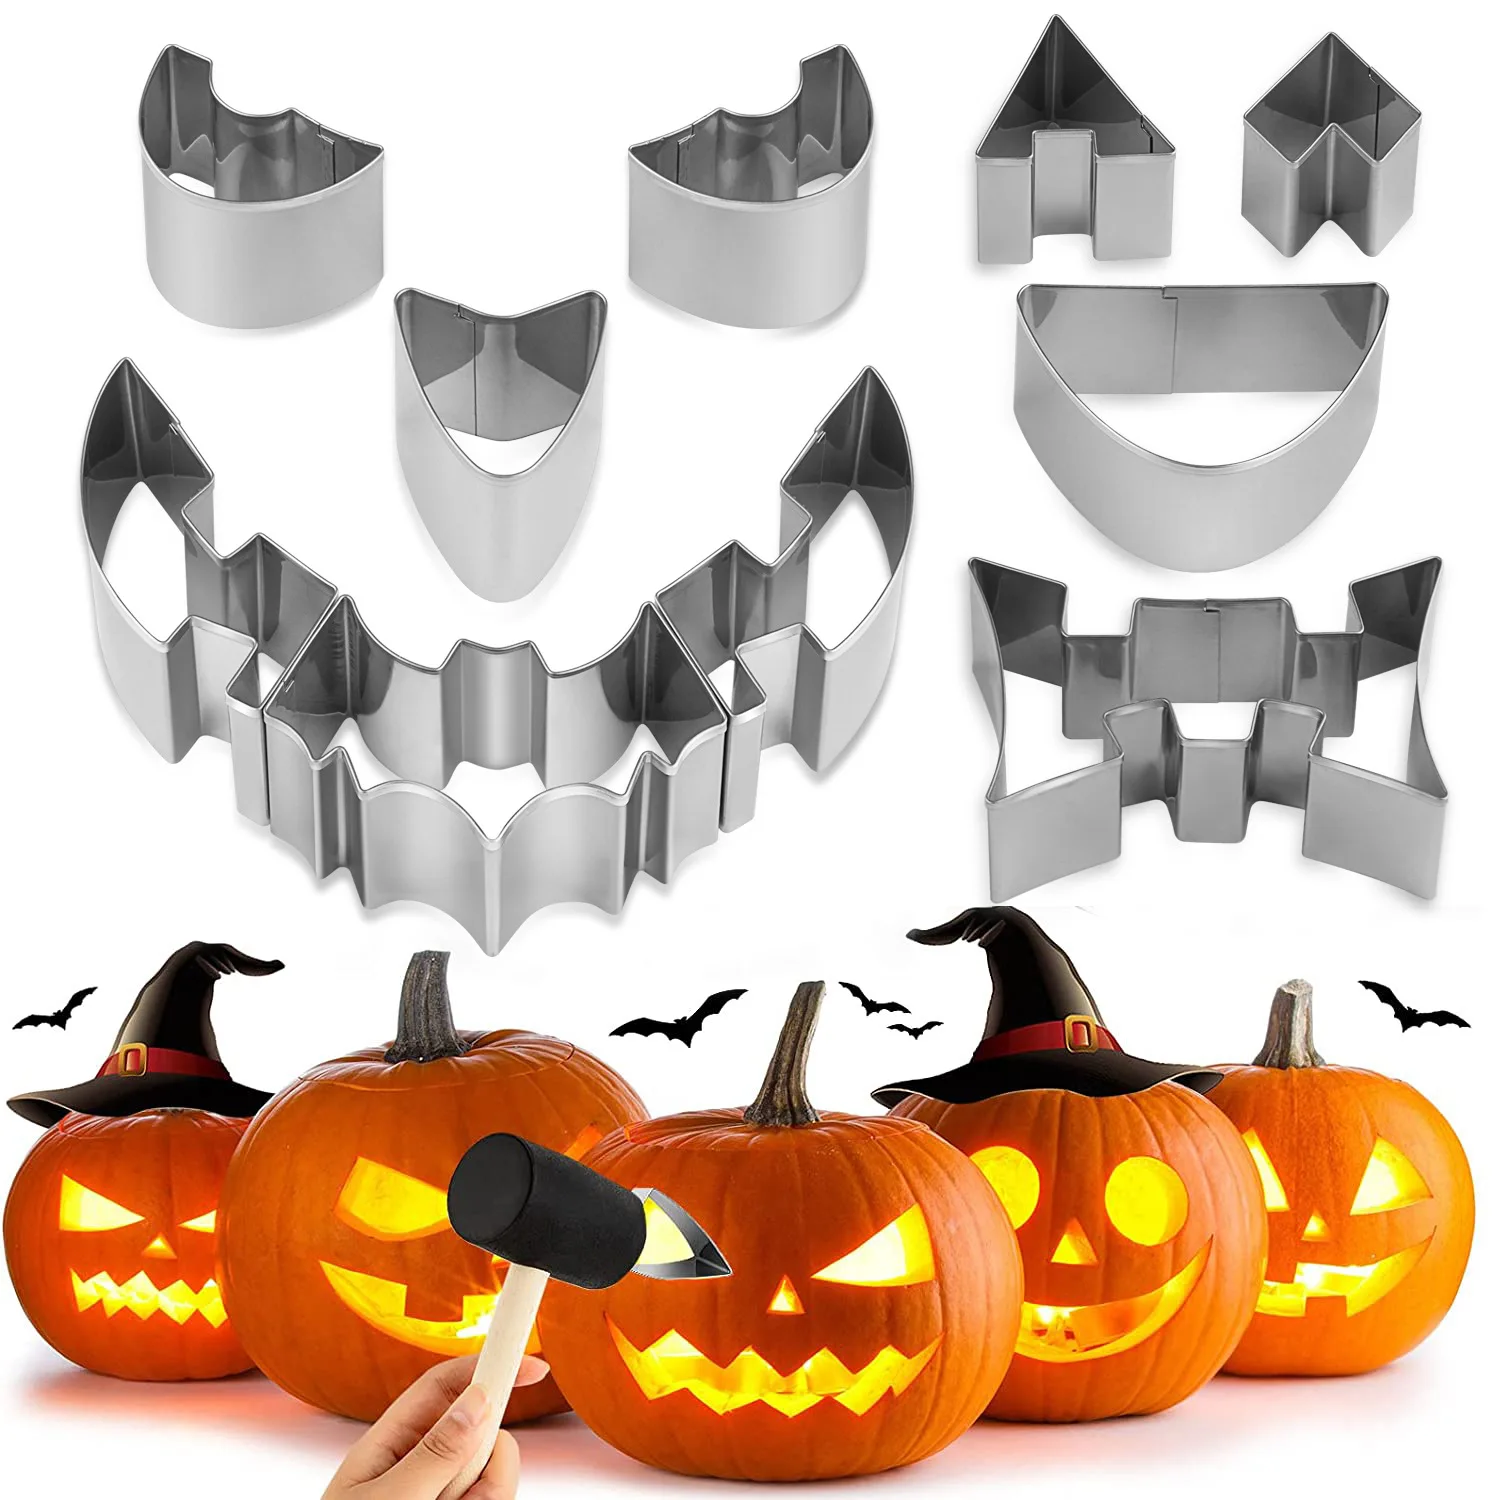 Customized Halloween Pumpkin Carving Set OEM & ODM Pumpkin Carving Kit Set Wholesale Pumpkin Carving Kit Tools Set for Kids